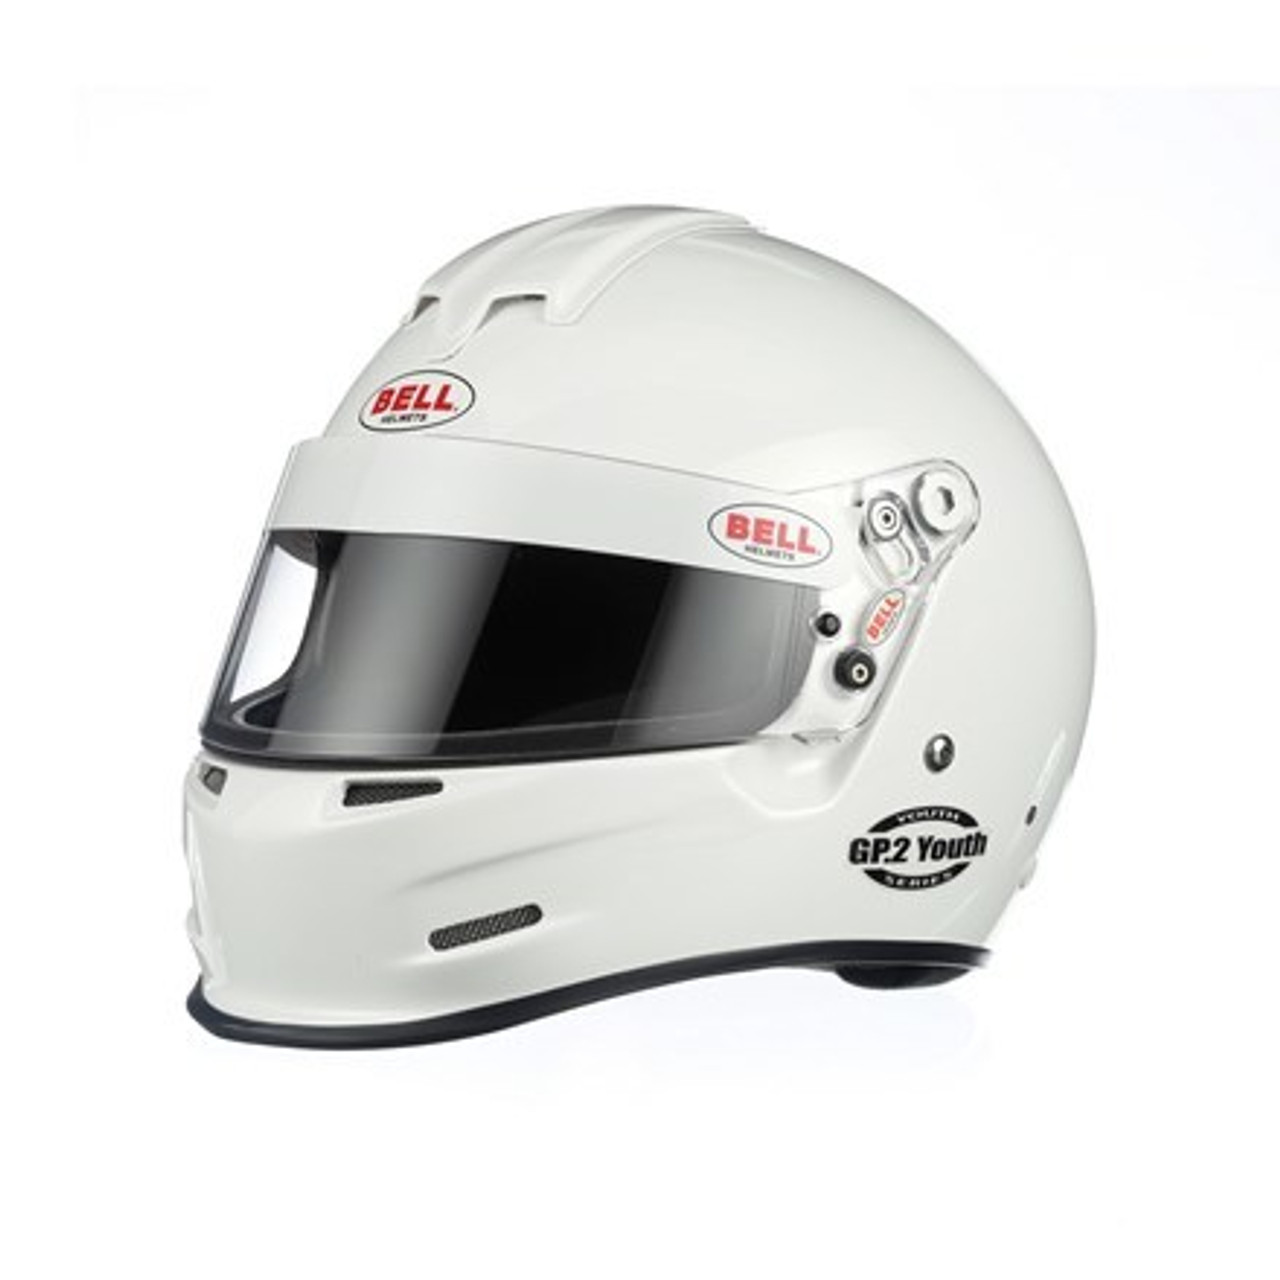 GP2 Youth Helmet White 4XS SFI24.1-15 BEL1425001